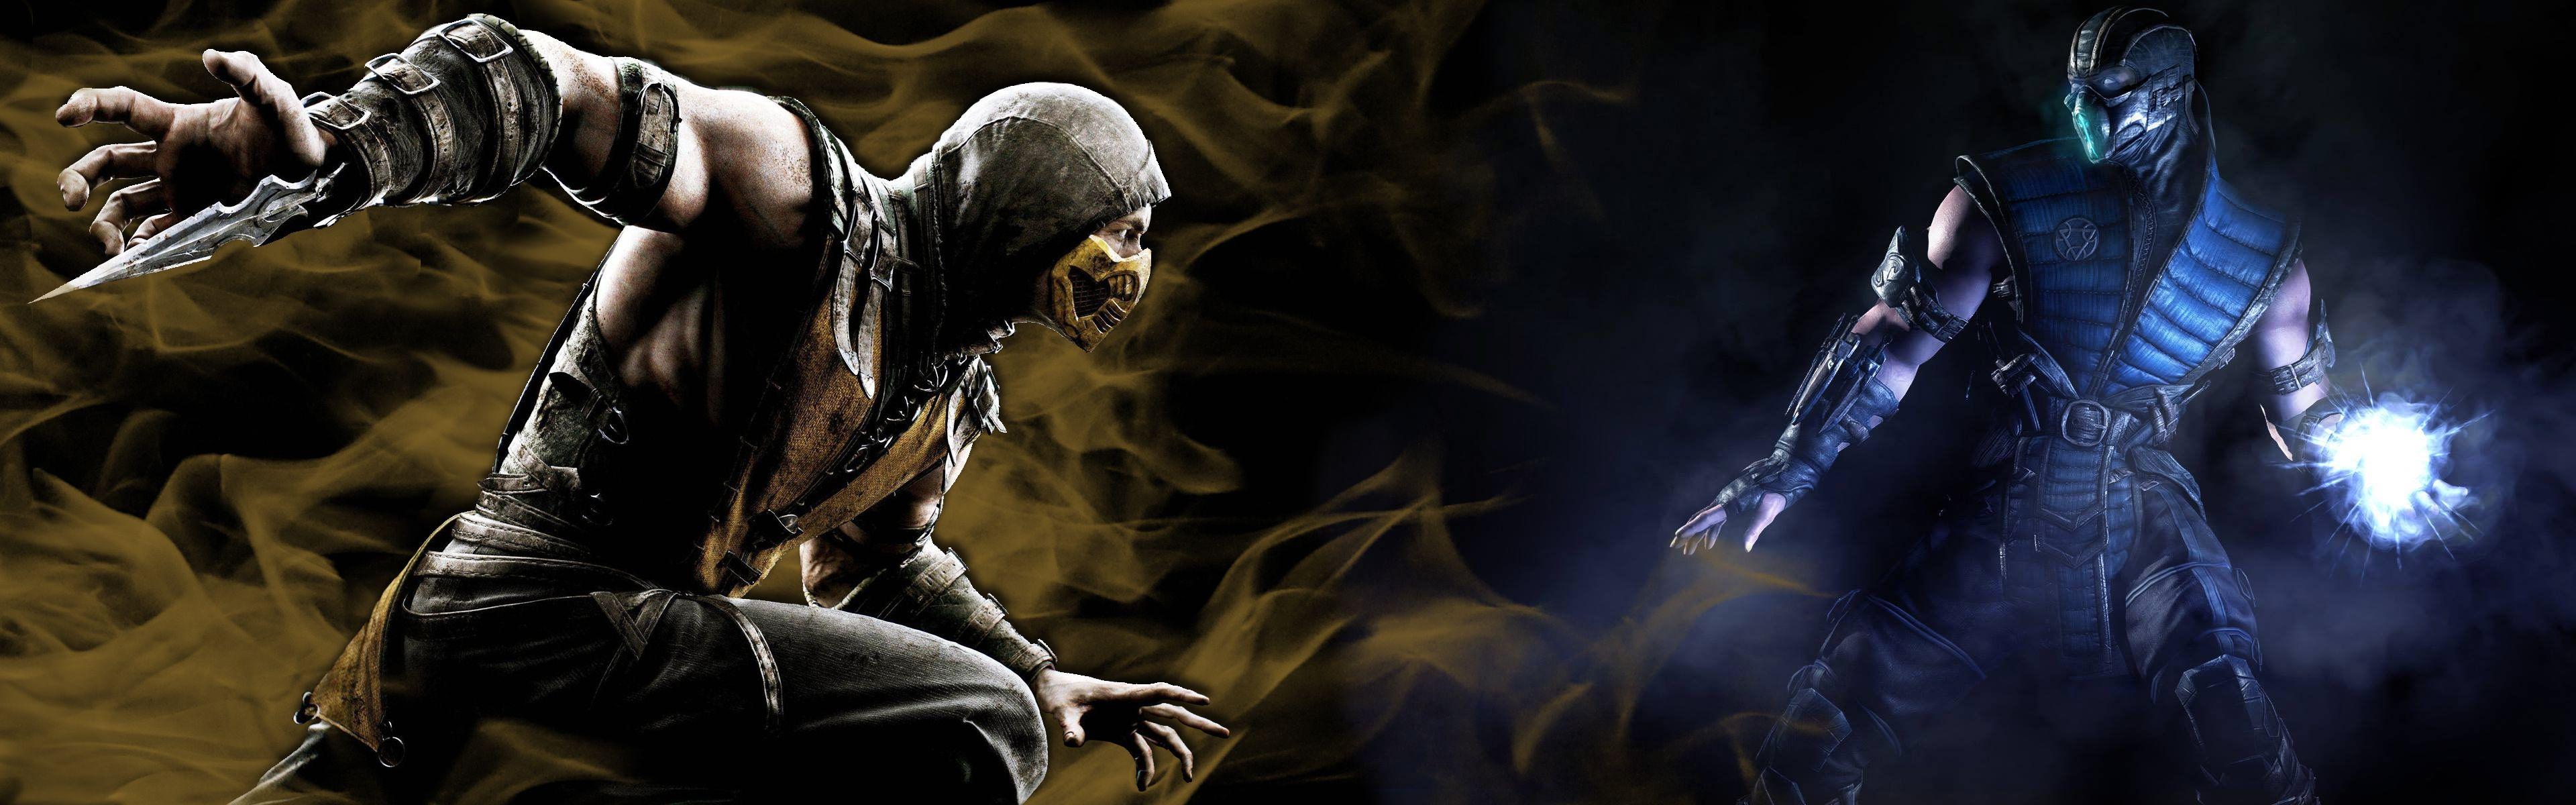 Mortal Kombat X Background, Scorpion Vs. Sub Zero